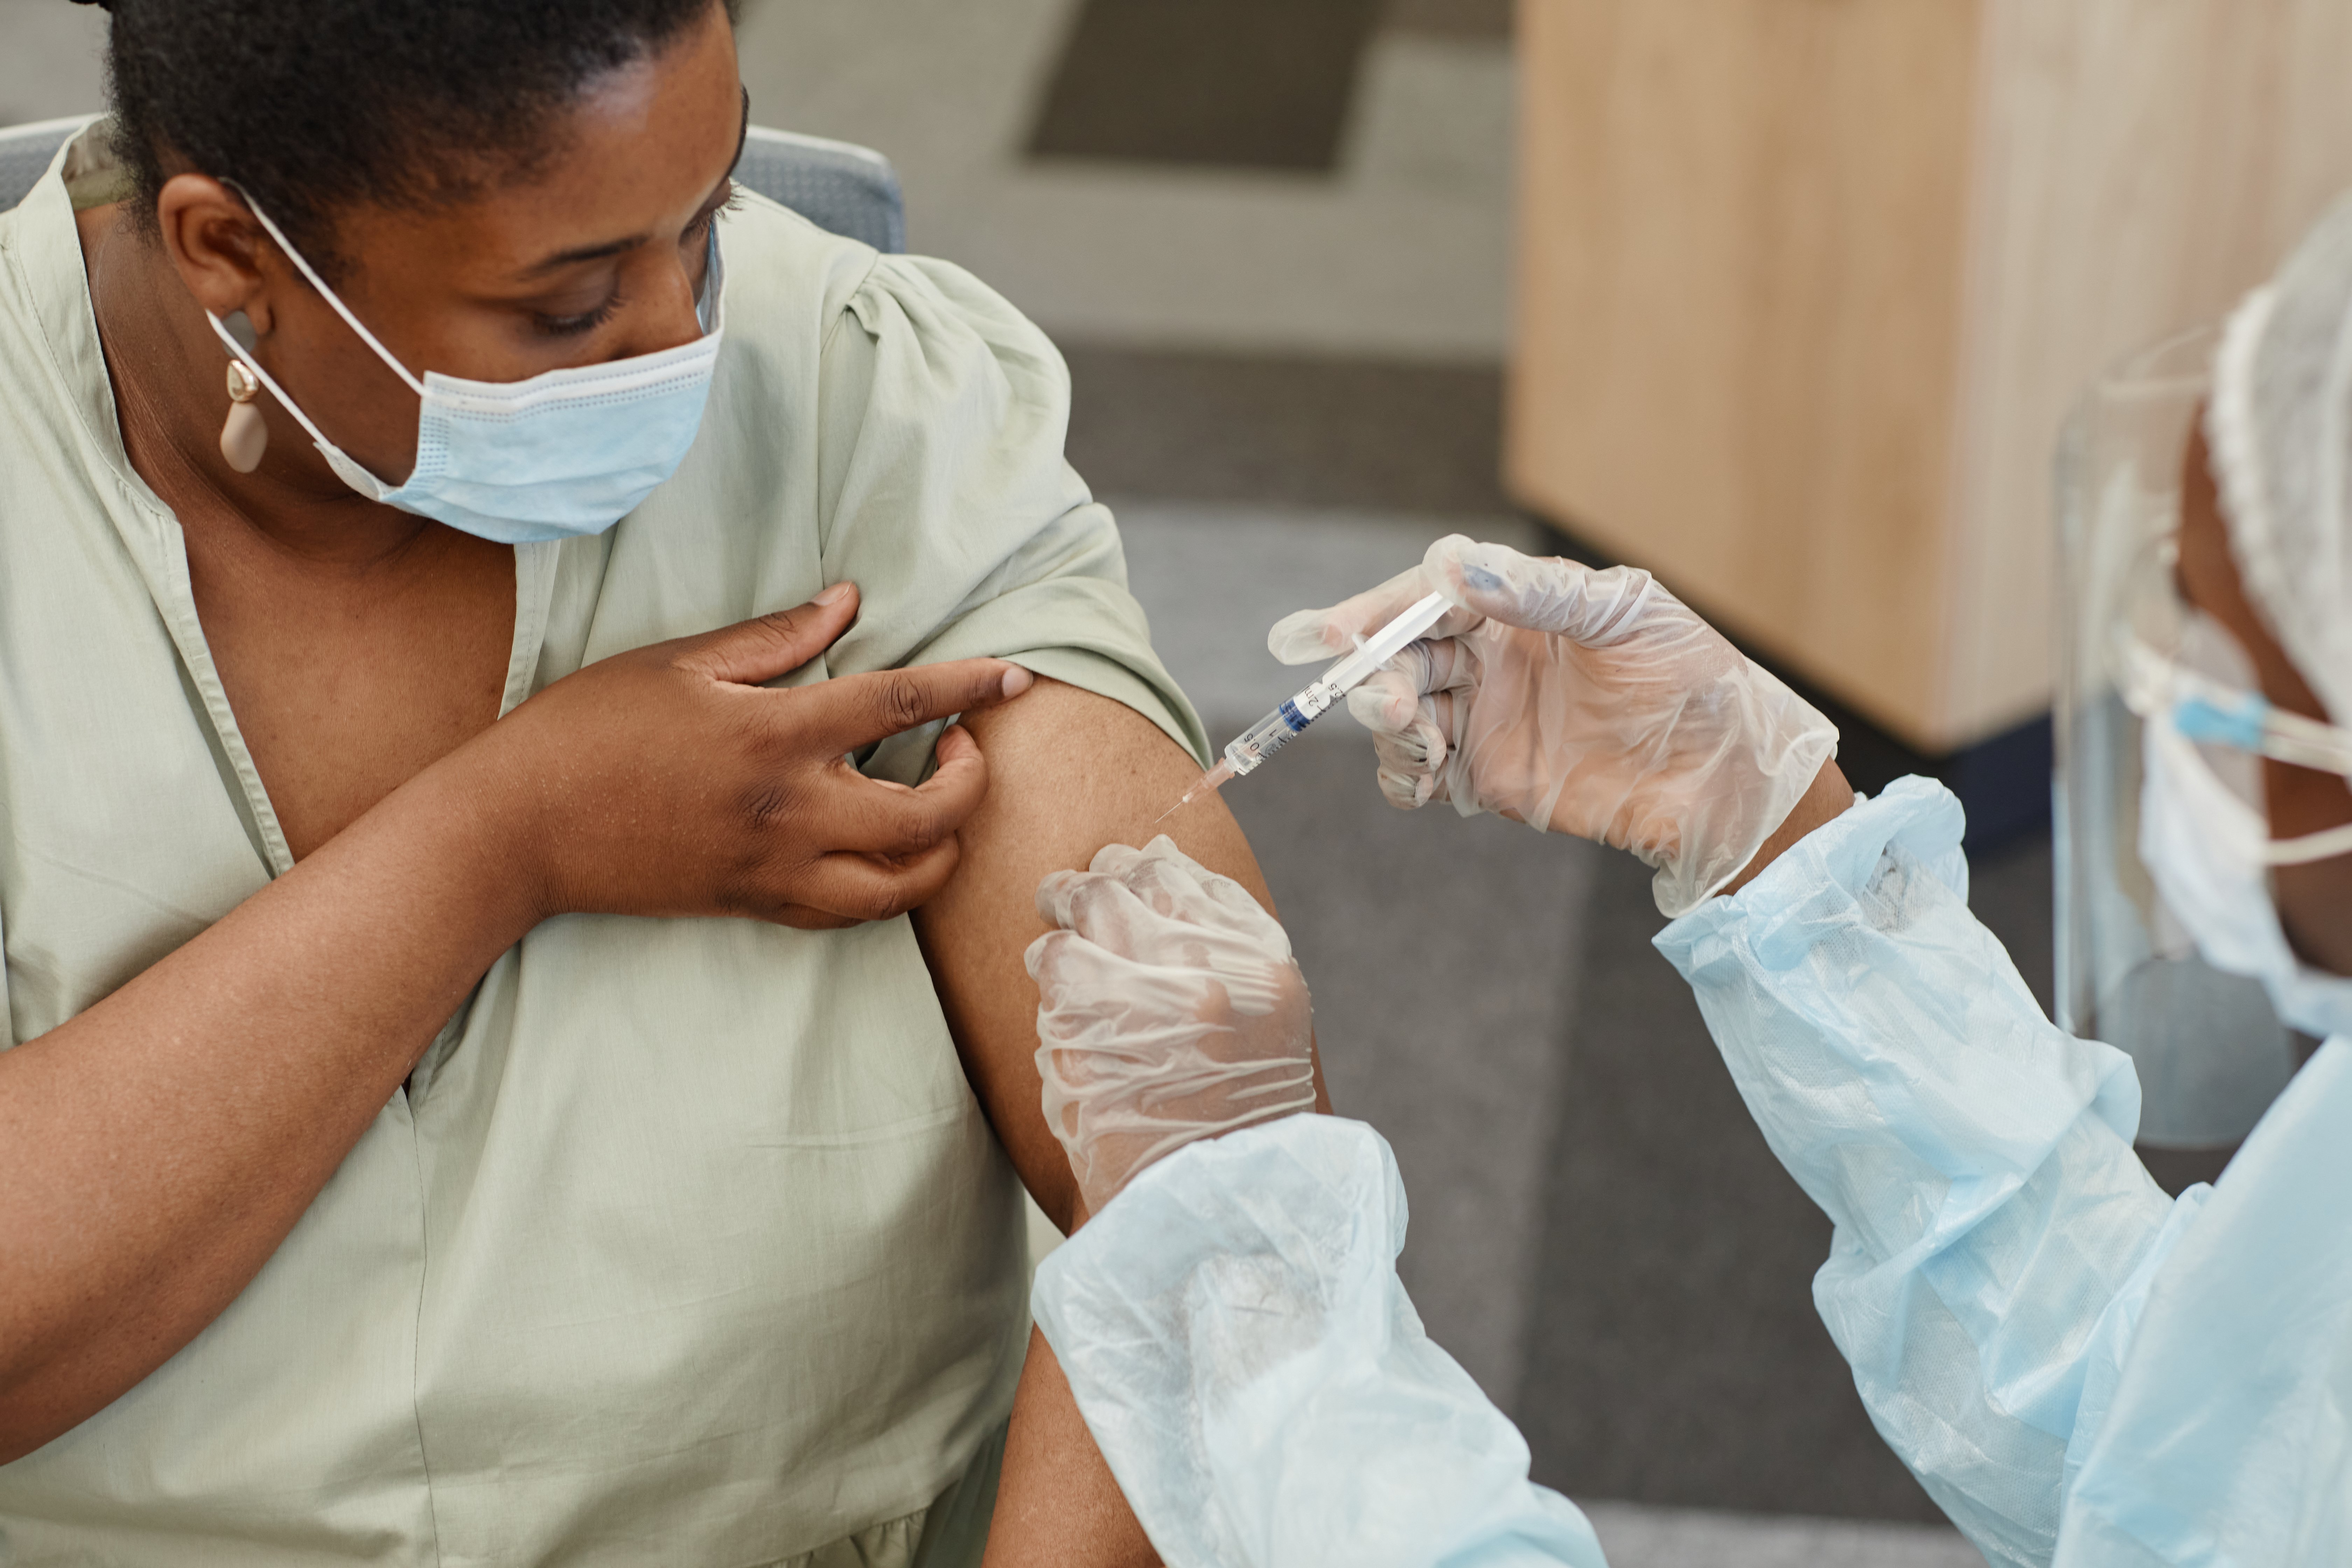 Patient receiving immunization